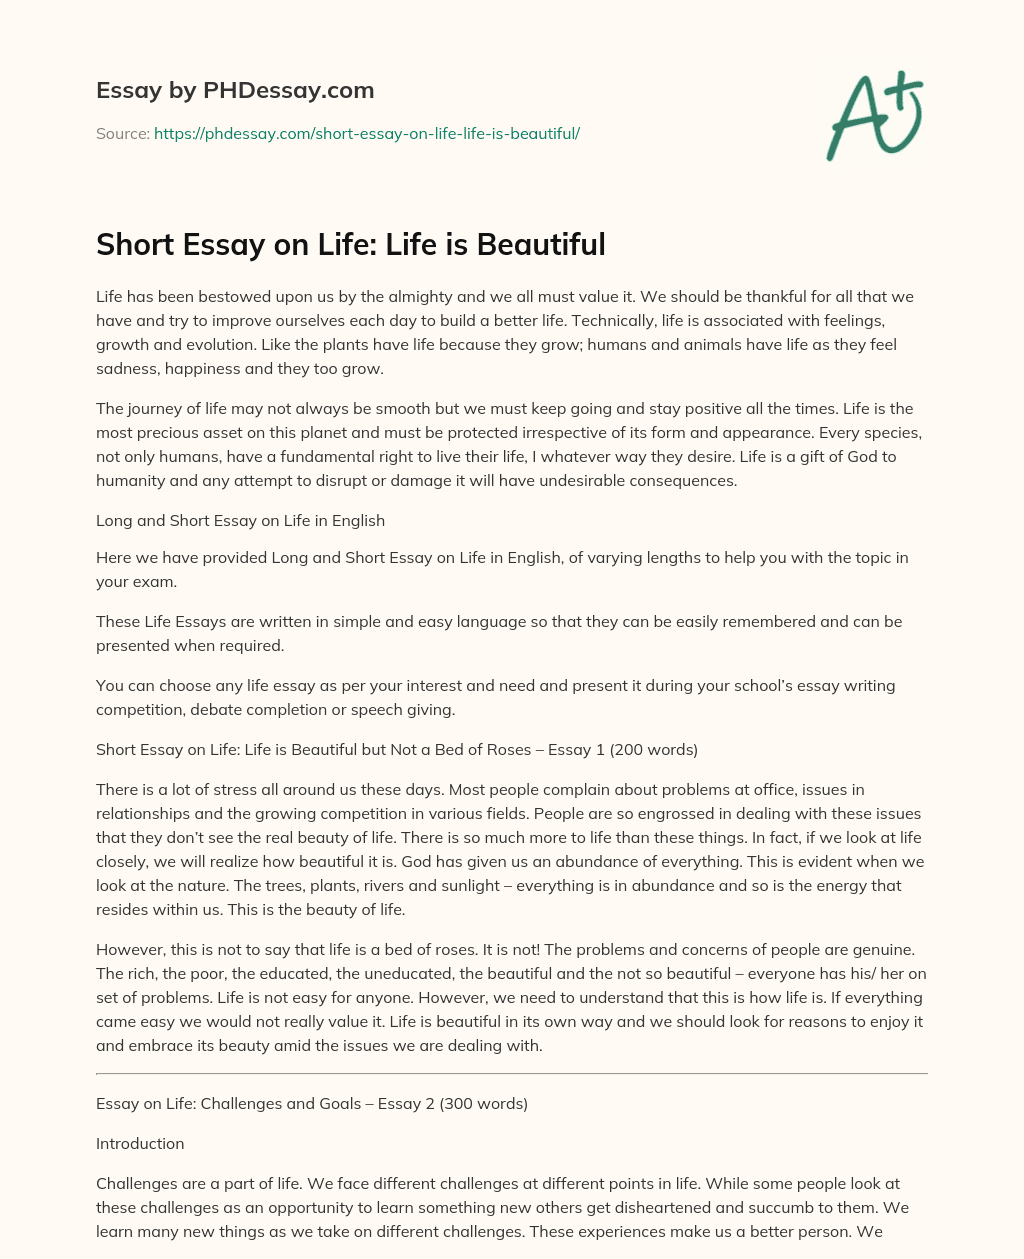 essay on beauty of life